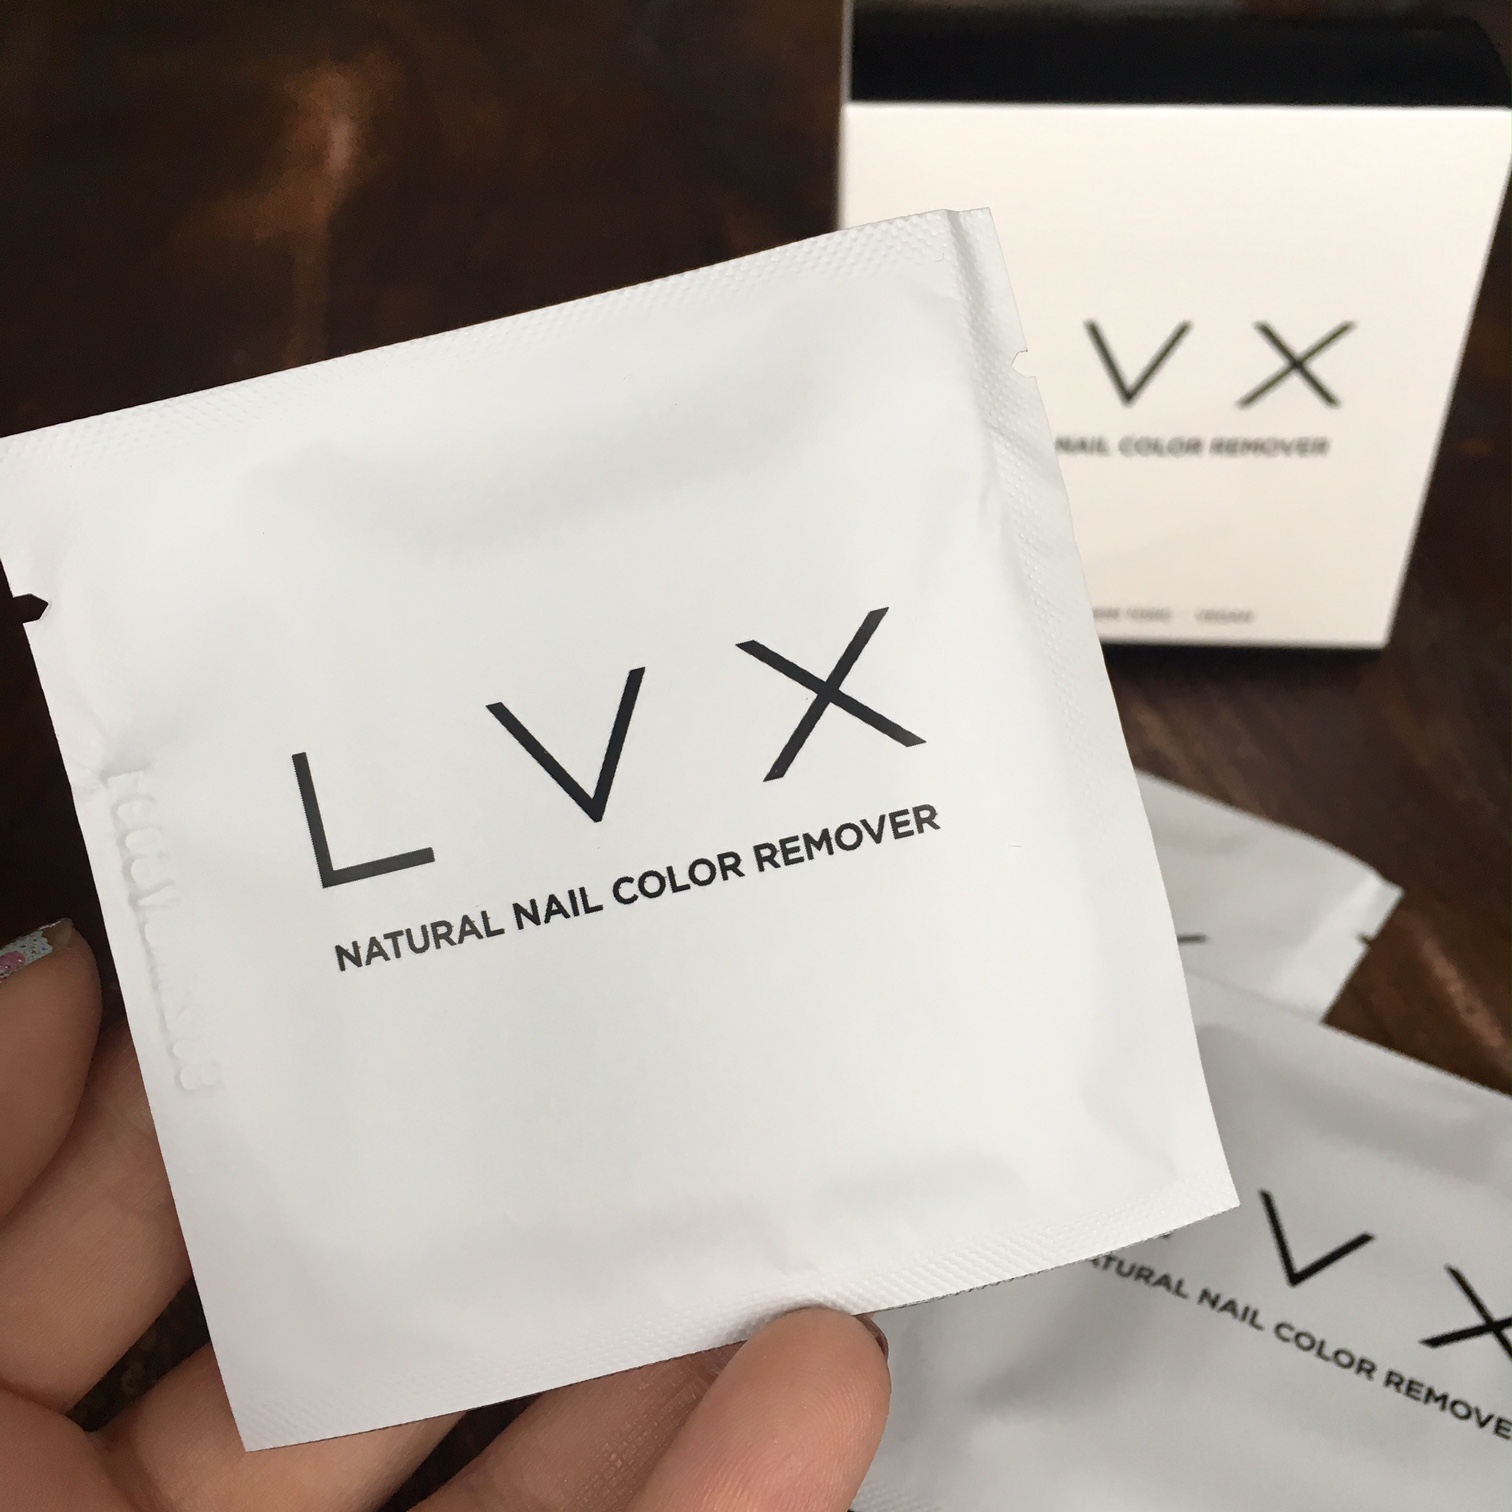 LVX nail polish remover wipes